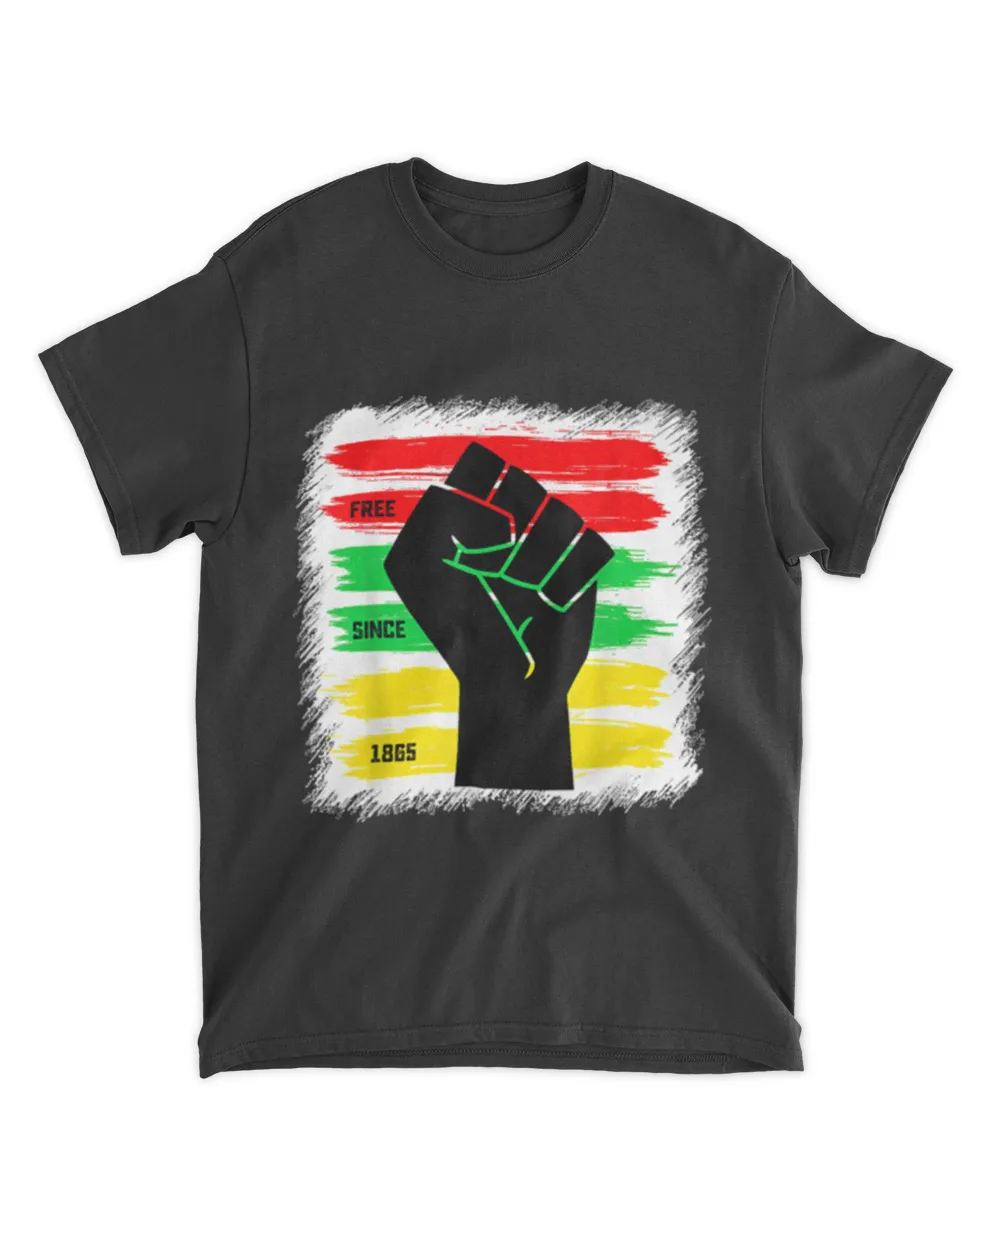 Juneteenth Free Since 1865 Black History Freedom Fist T-Shirt tee